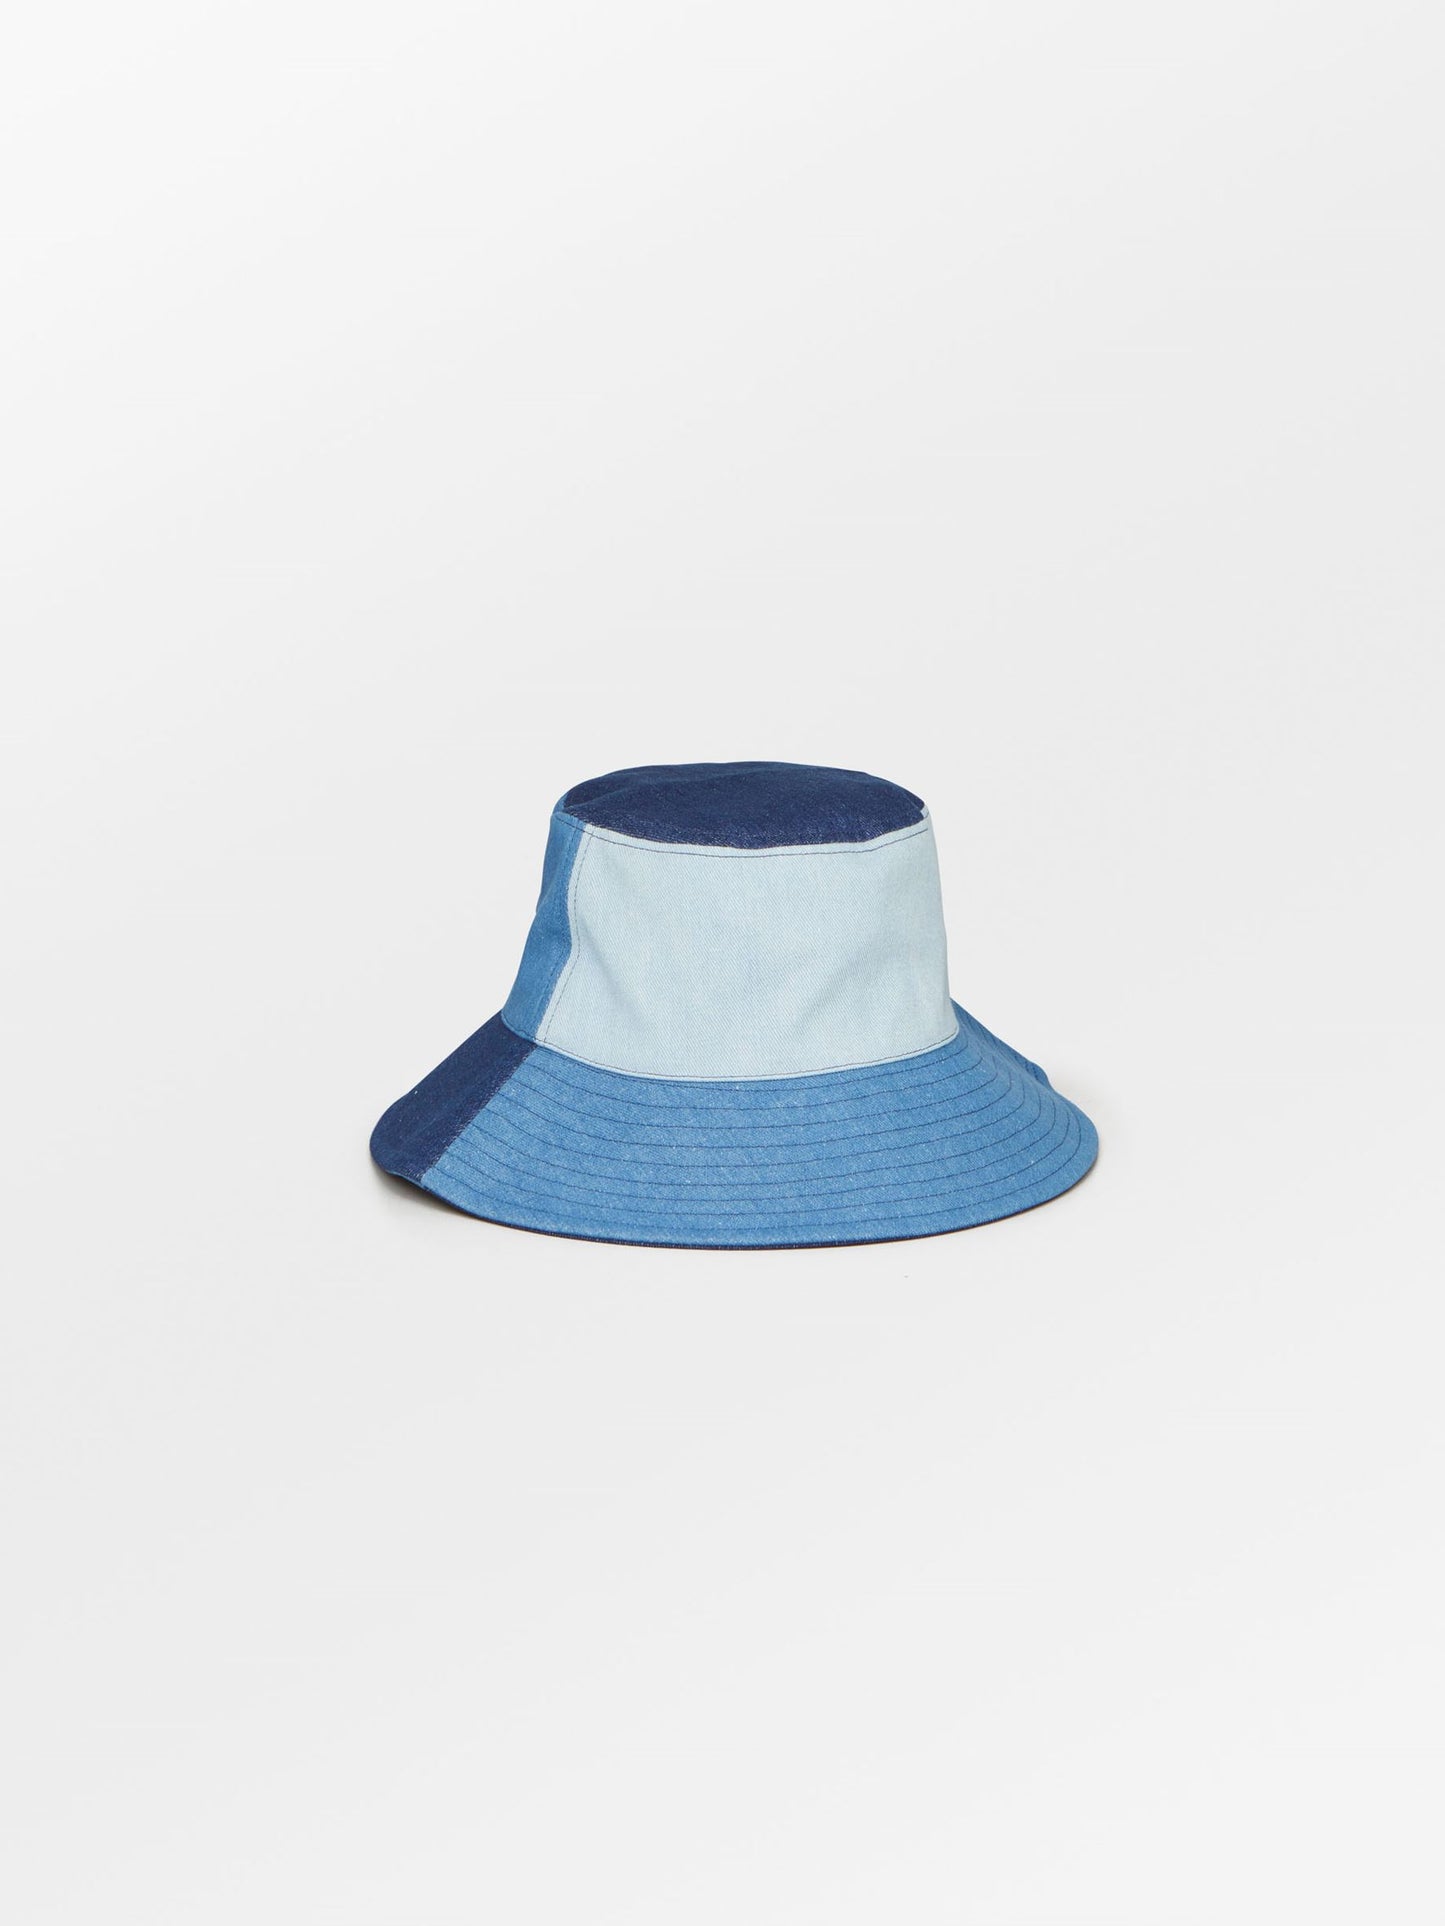 Becksöndergaard, Danila Bucket Hat - Patriot Blue, sale, sale